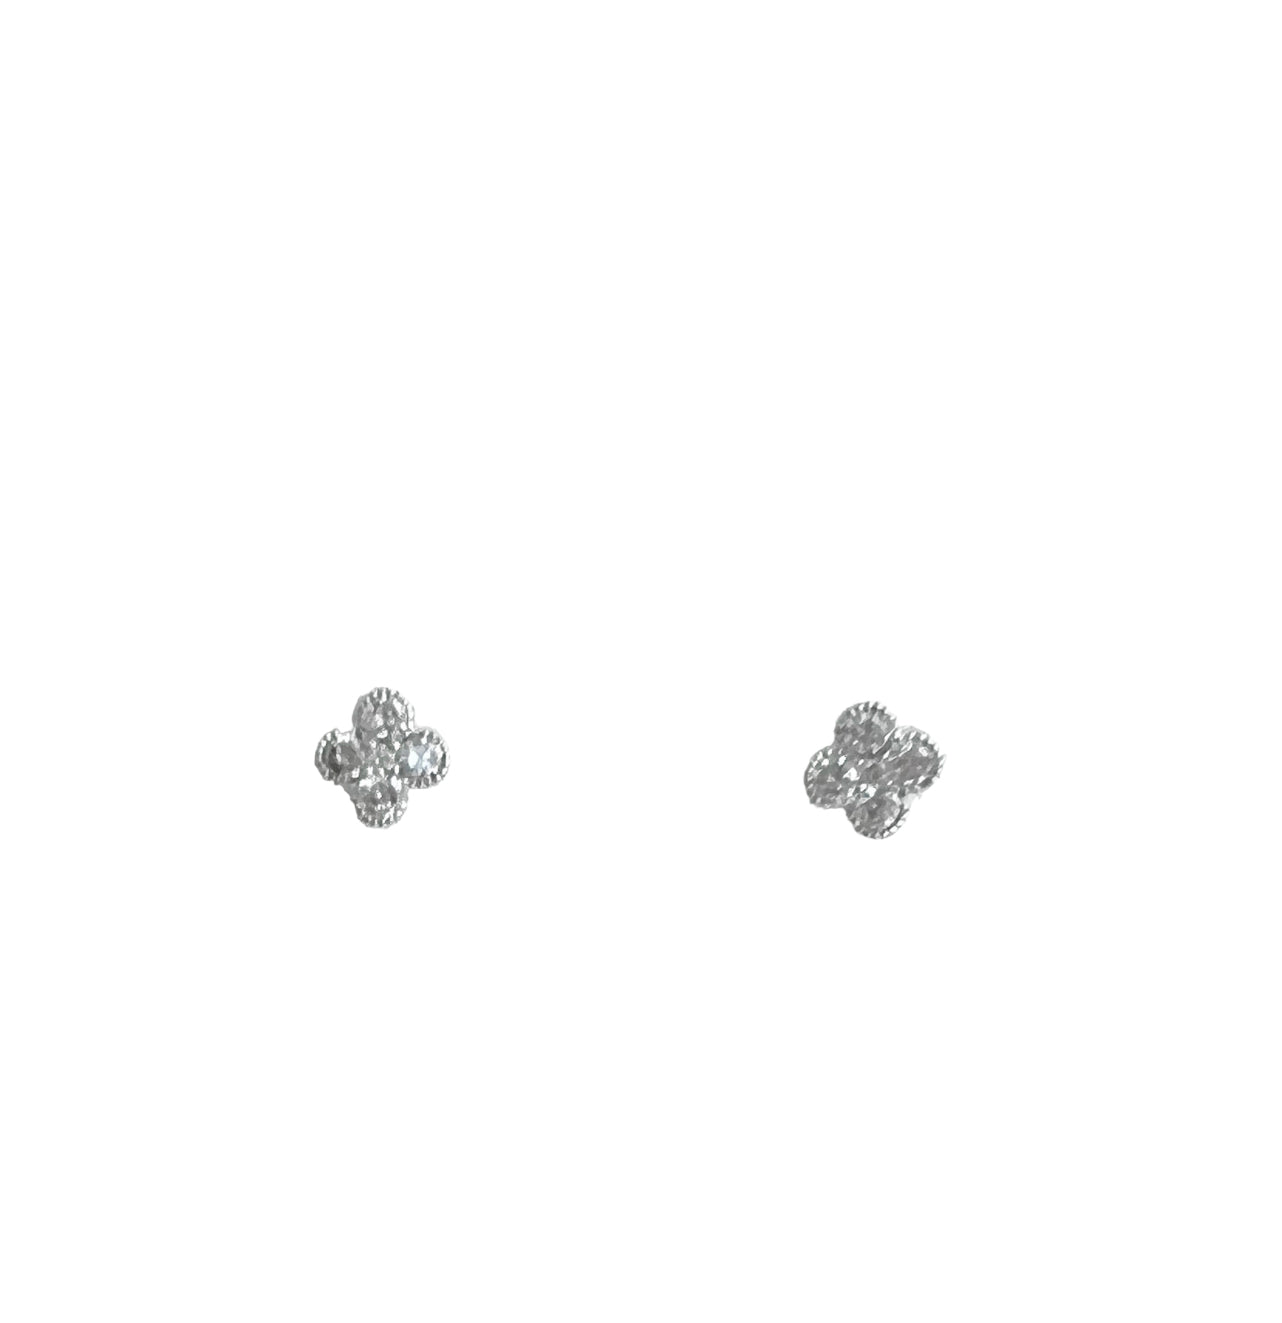 S.Row Designs Petite Clover Earring